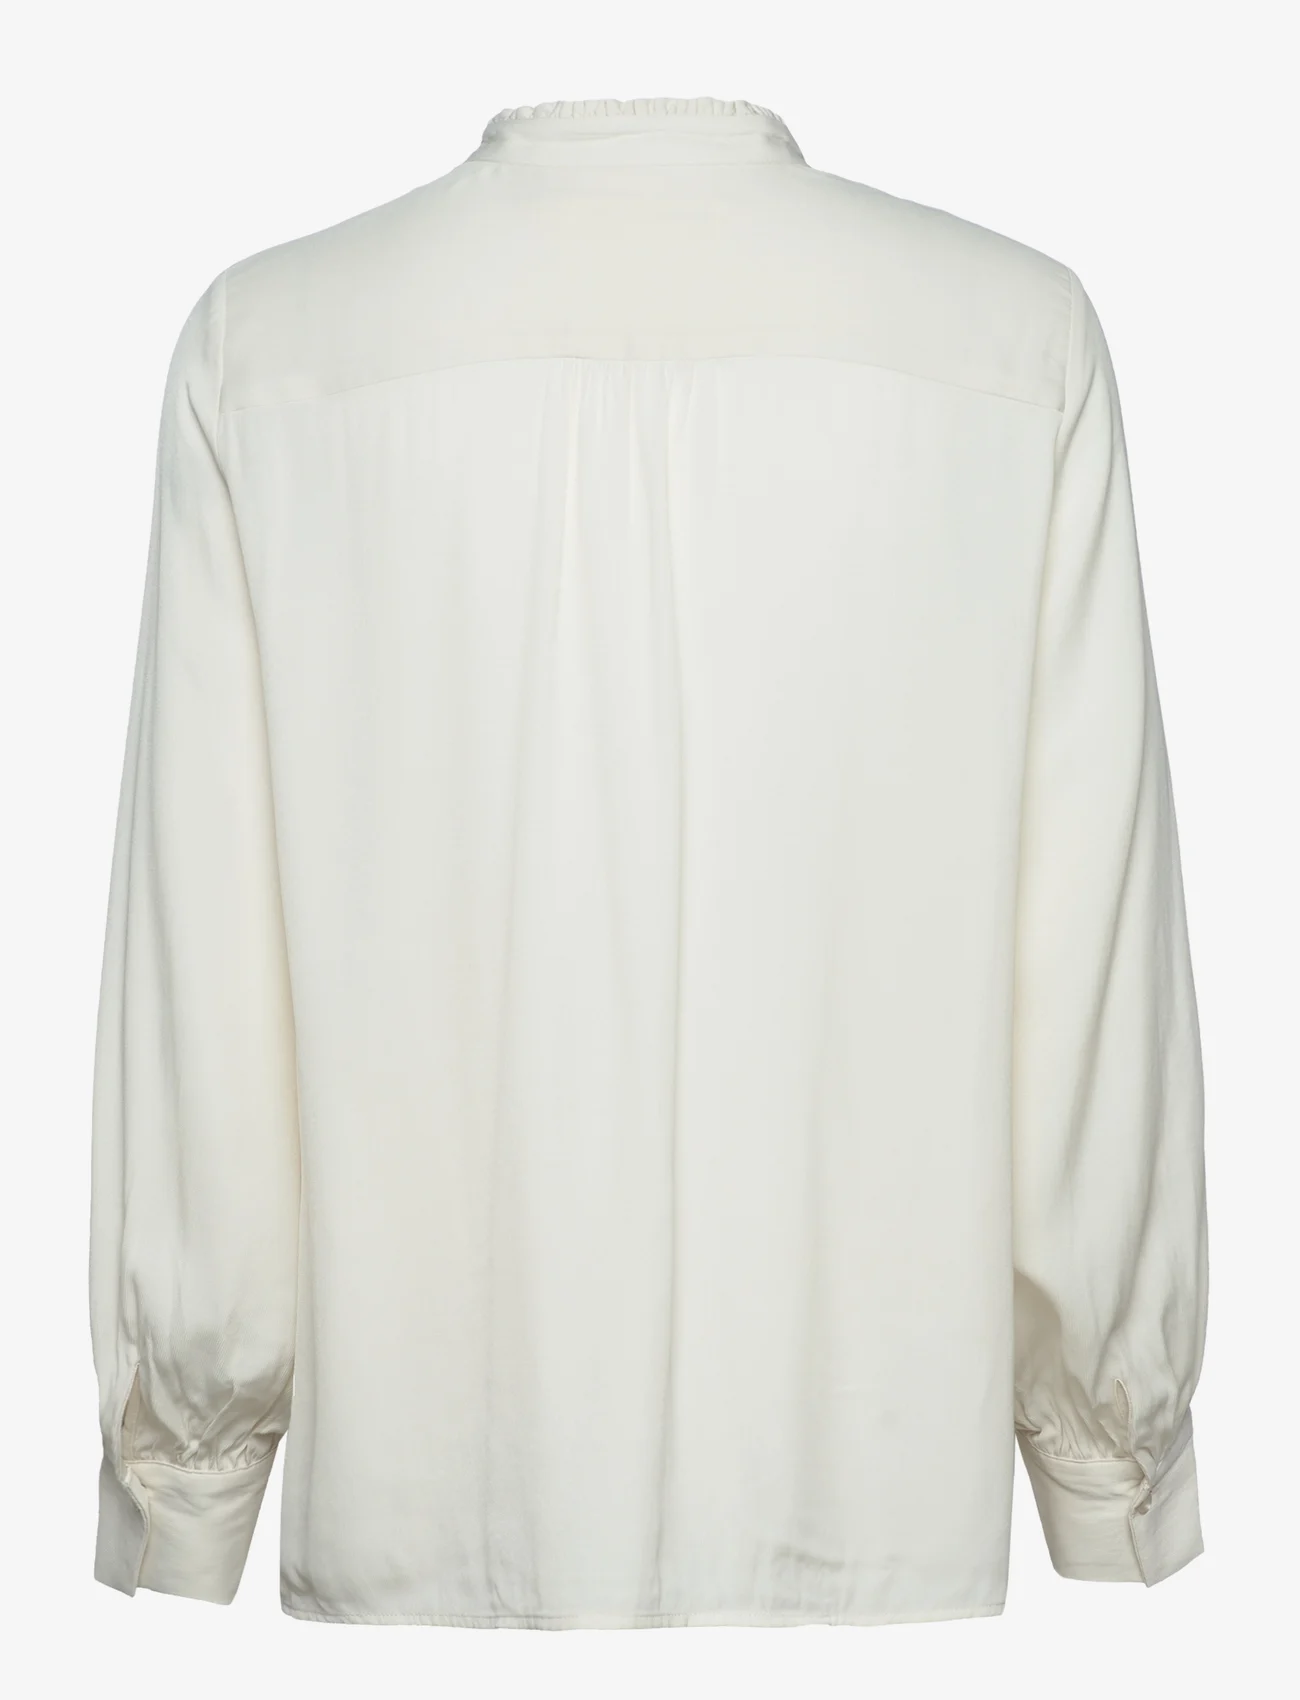 InWear - NixieIW Shirt - langærmede skjorter - whisper white - 1